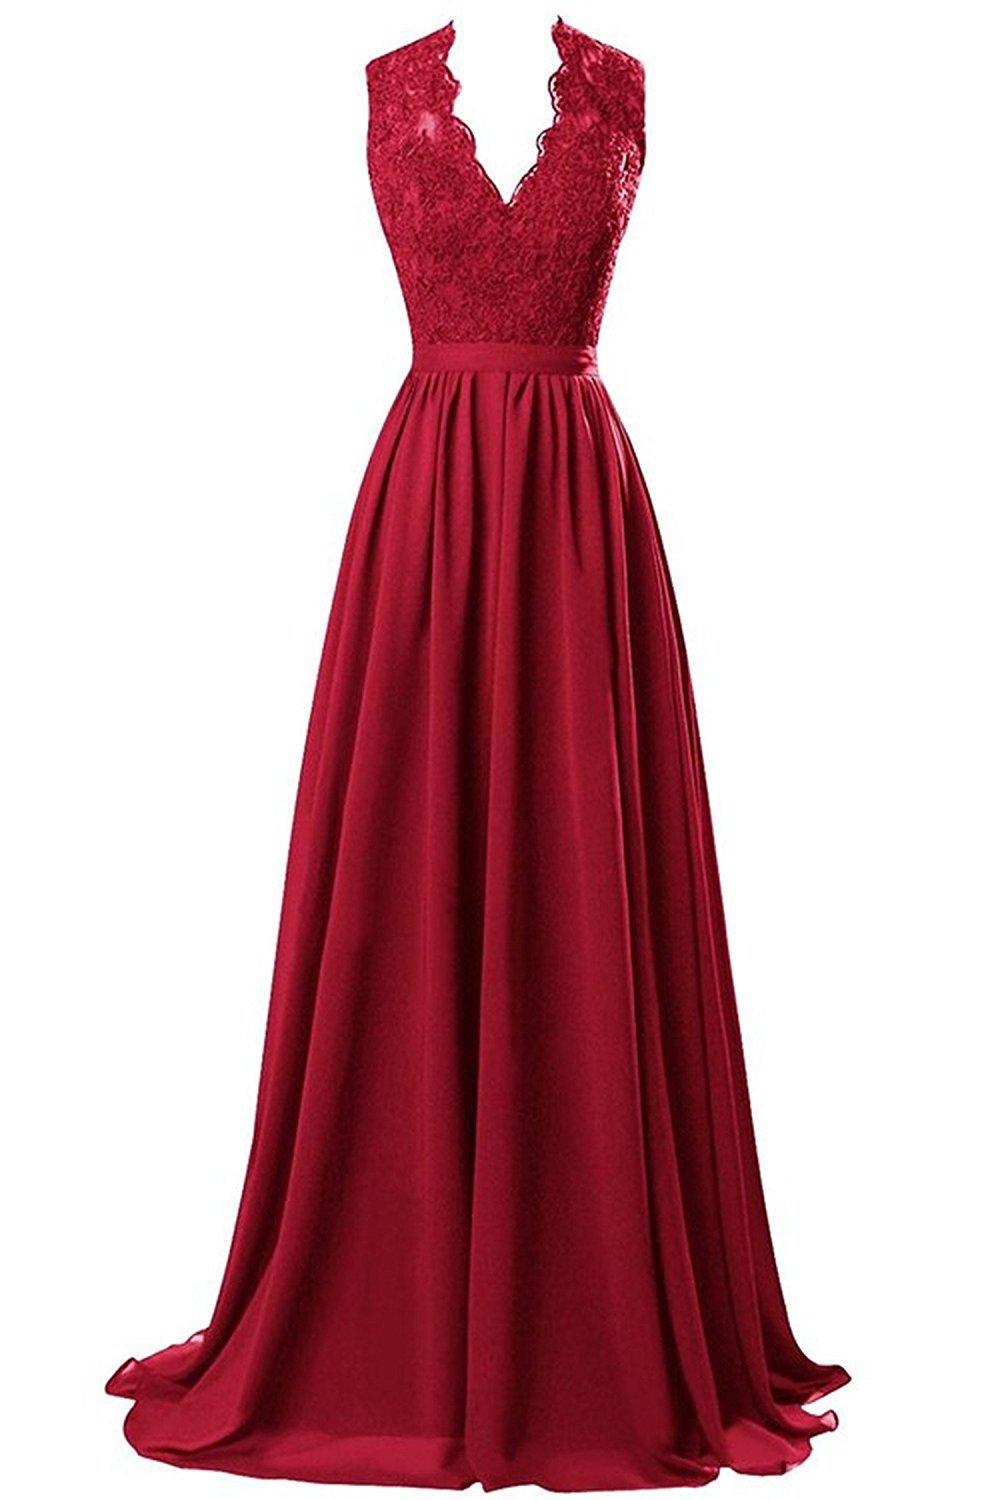 V Neck A-line Long Chiffon Red Women Prom Dress, Lace Appliques Women Evening Dress 2019